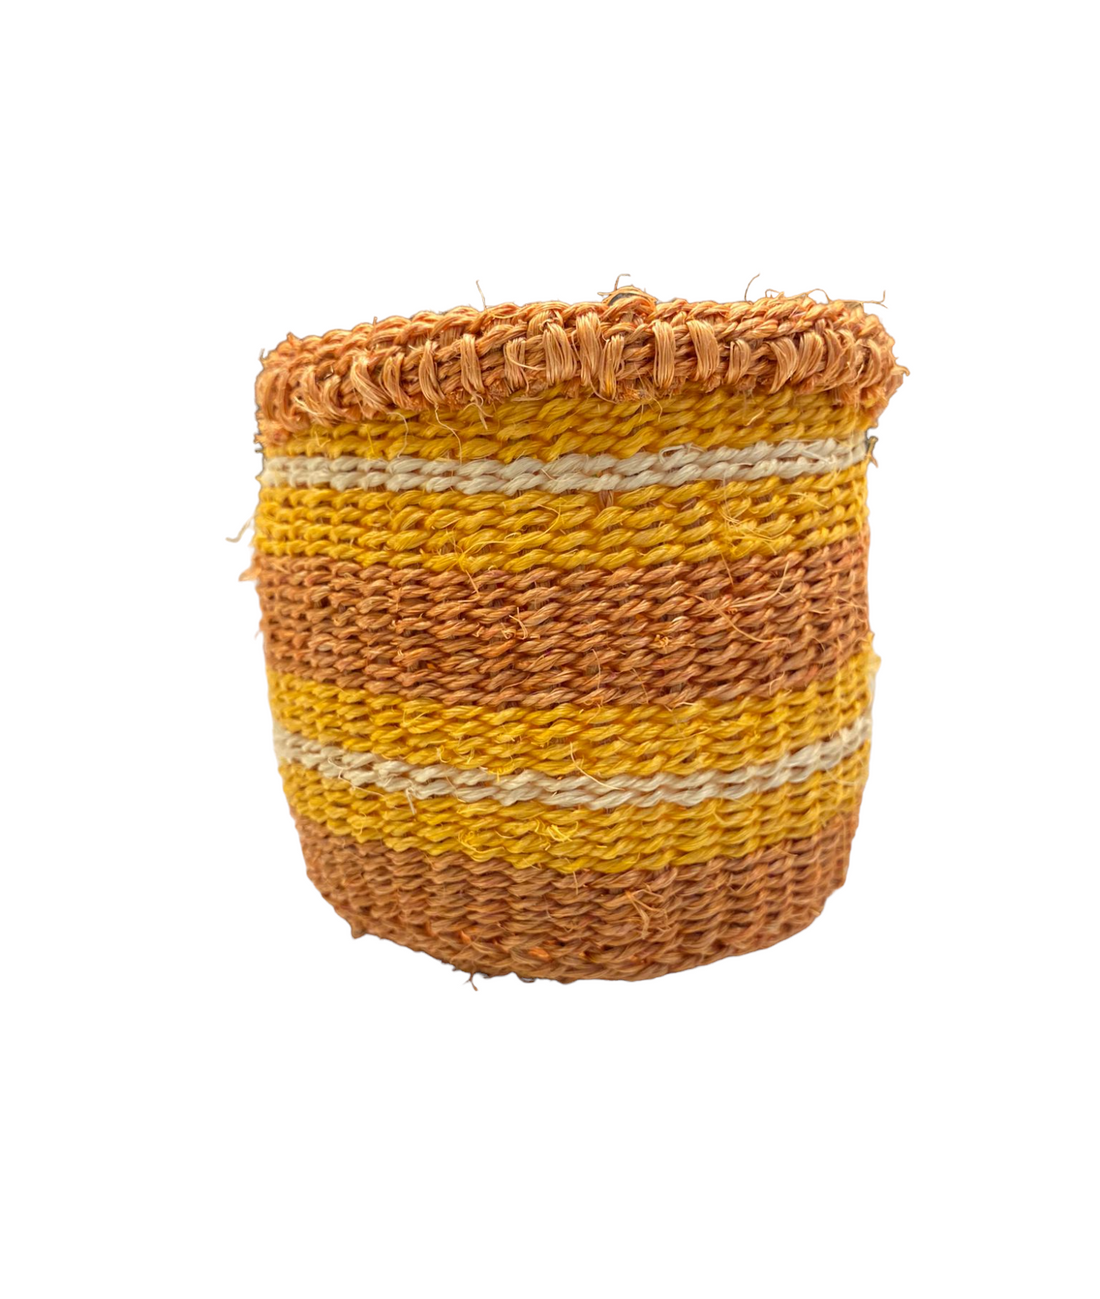 Artisanal Handwoven Sisal Basket Practical Weave XXS 18